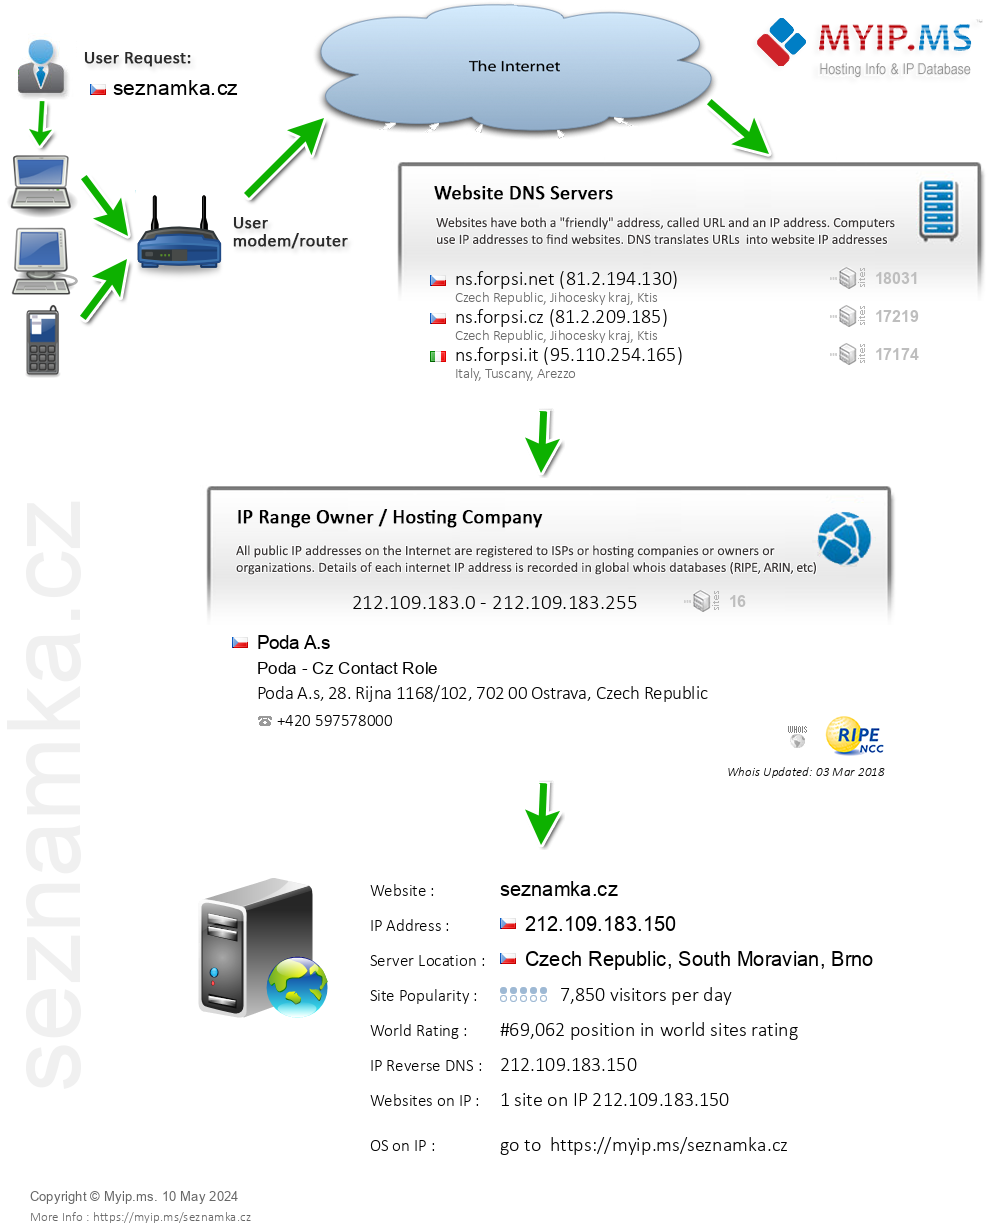 Seznamka.cz - Website Hosting Visual IP Diagram